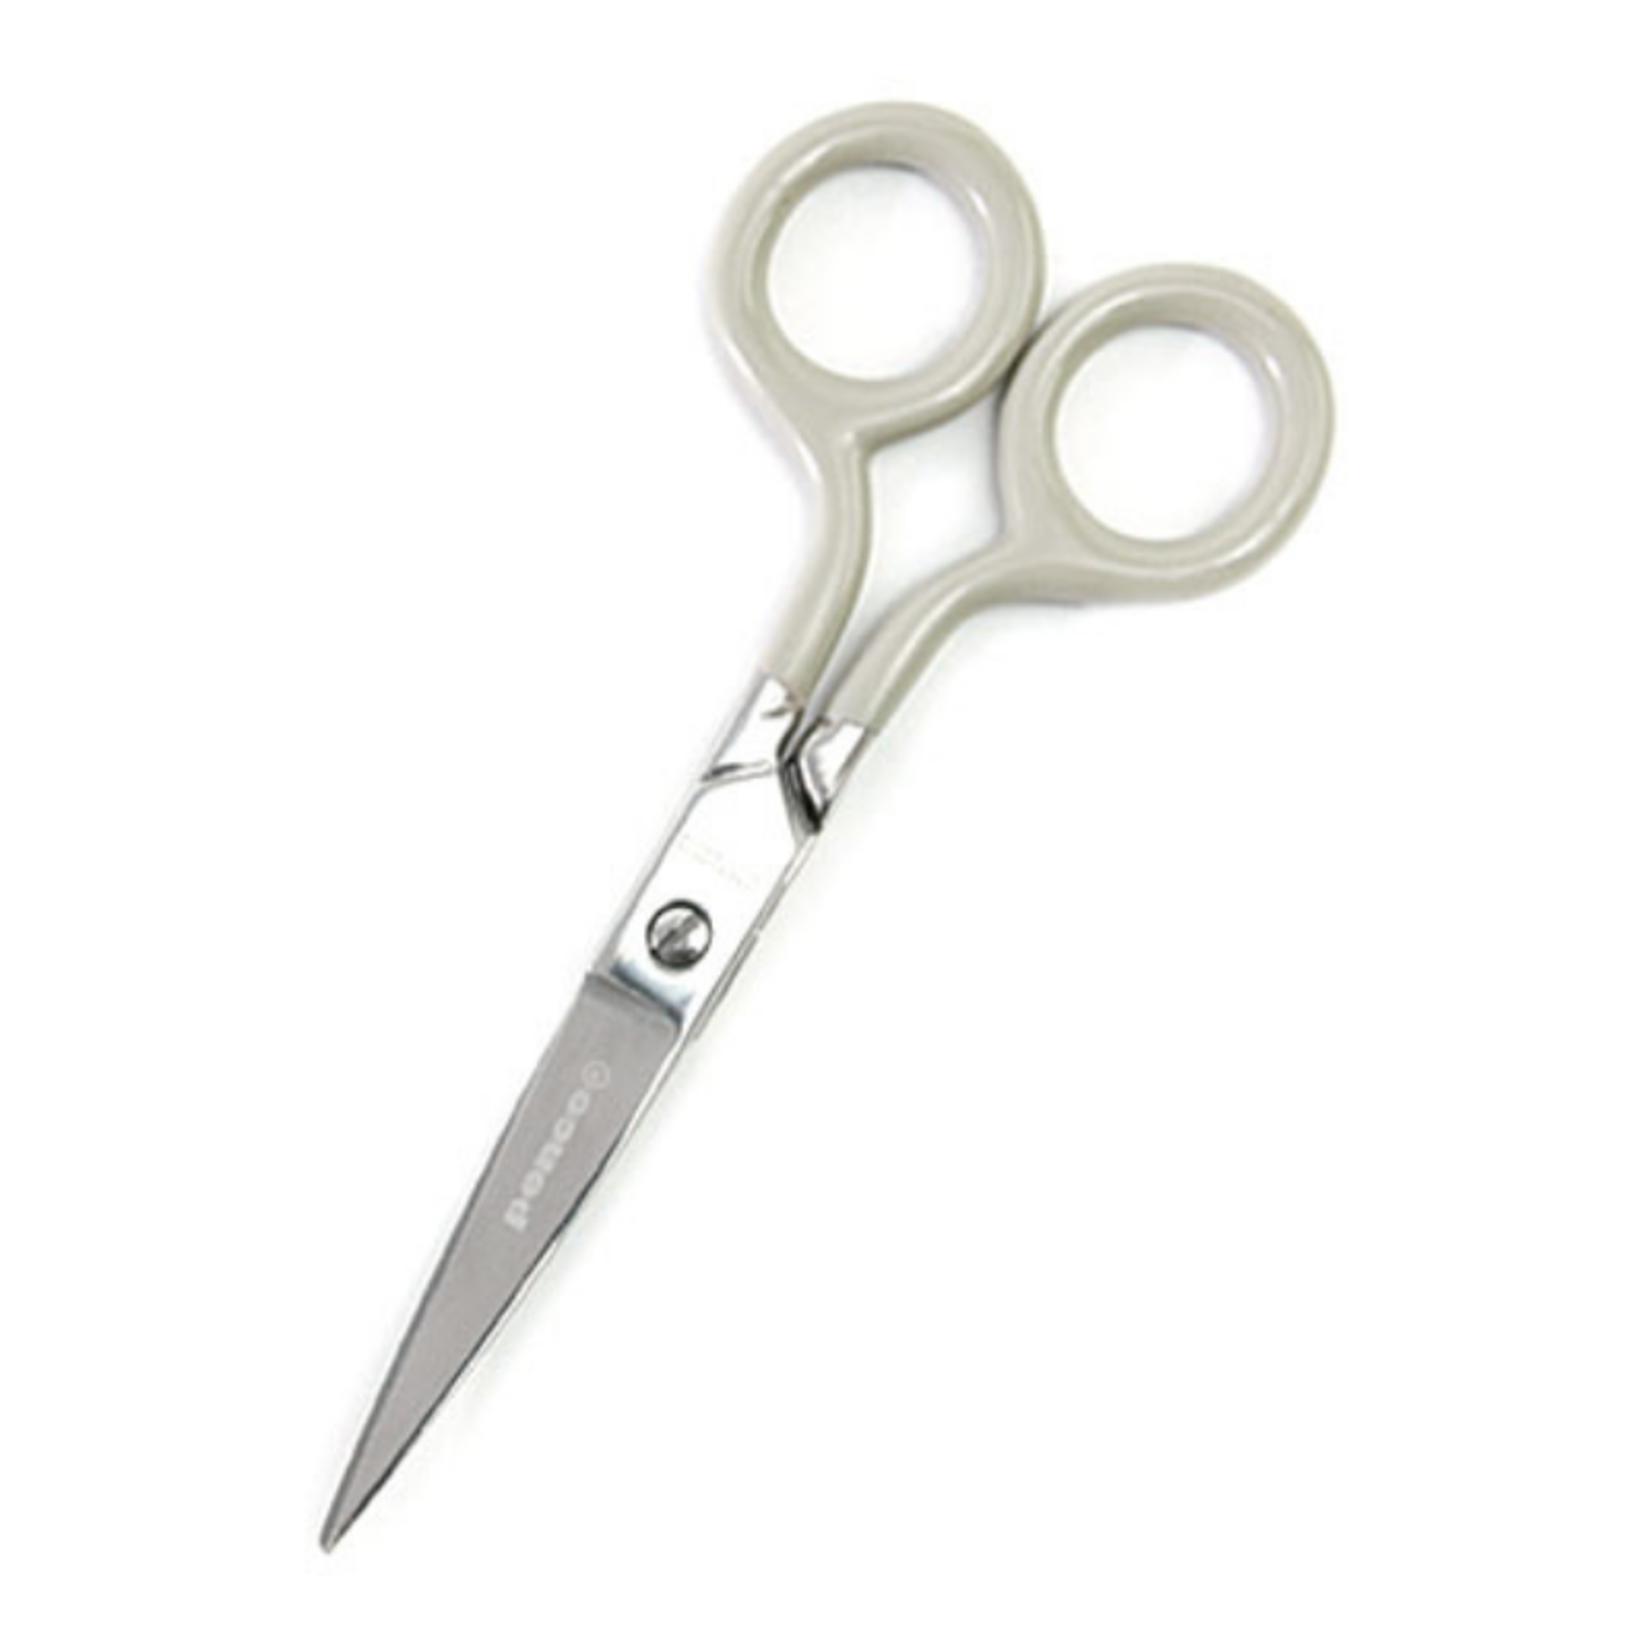 hightide / penco penco small scissors - ivory